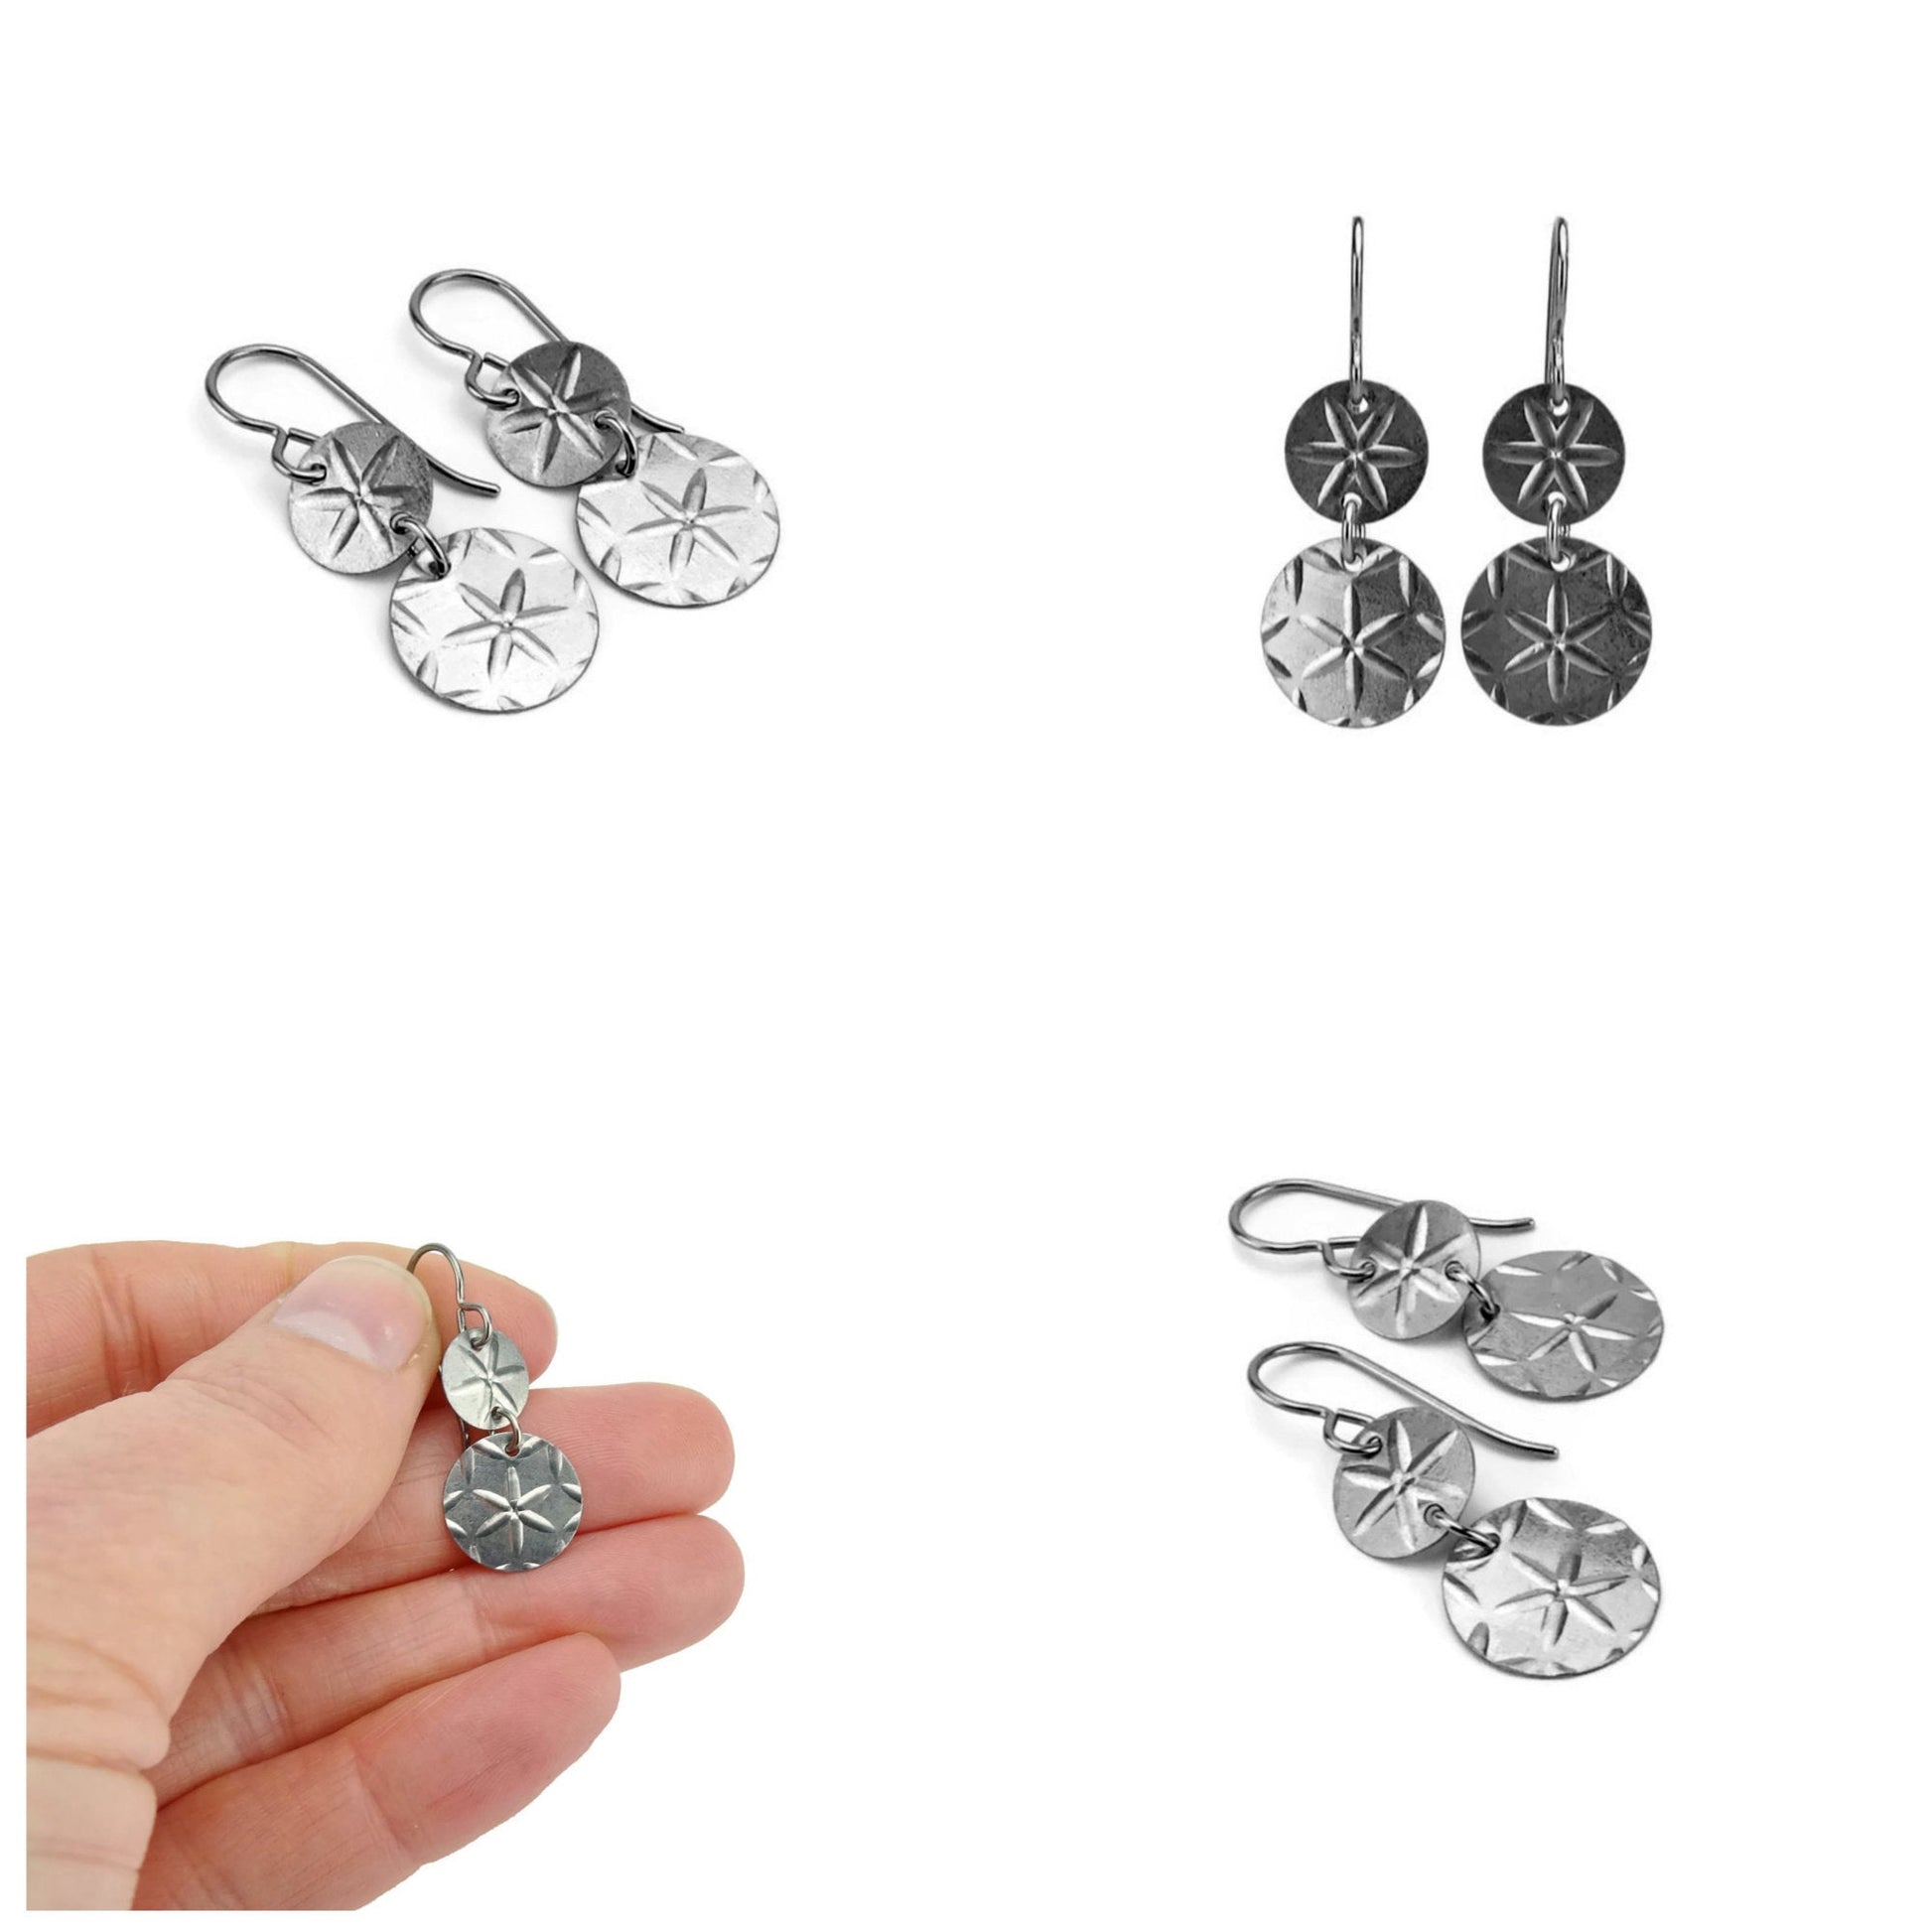 Titanium Earrings Double Disc Earrings, Star Patterned Discs Niobium Earrings, Hypoallergenic Nickel Free Disk Earrings for Sensitive Ears